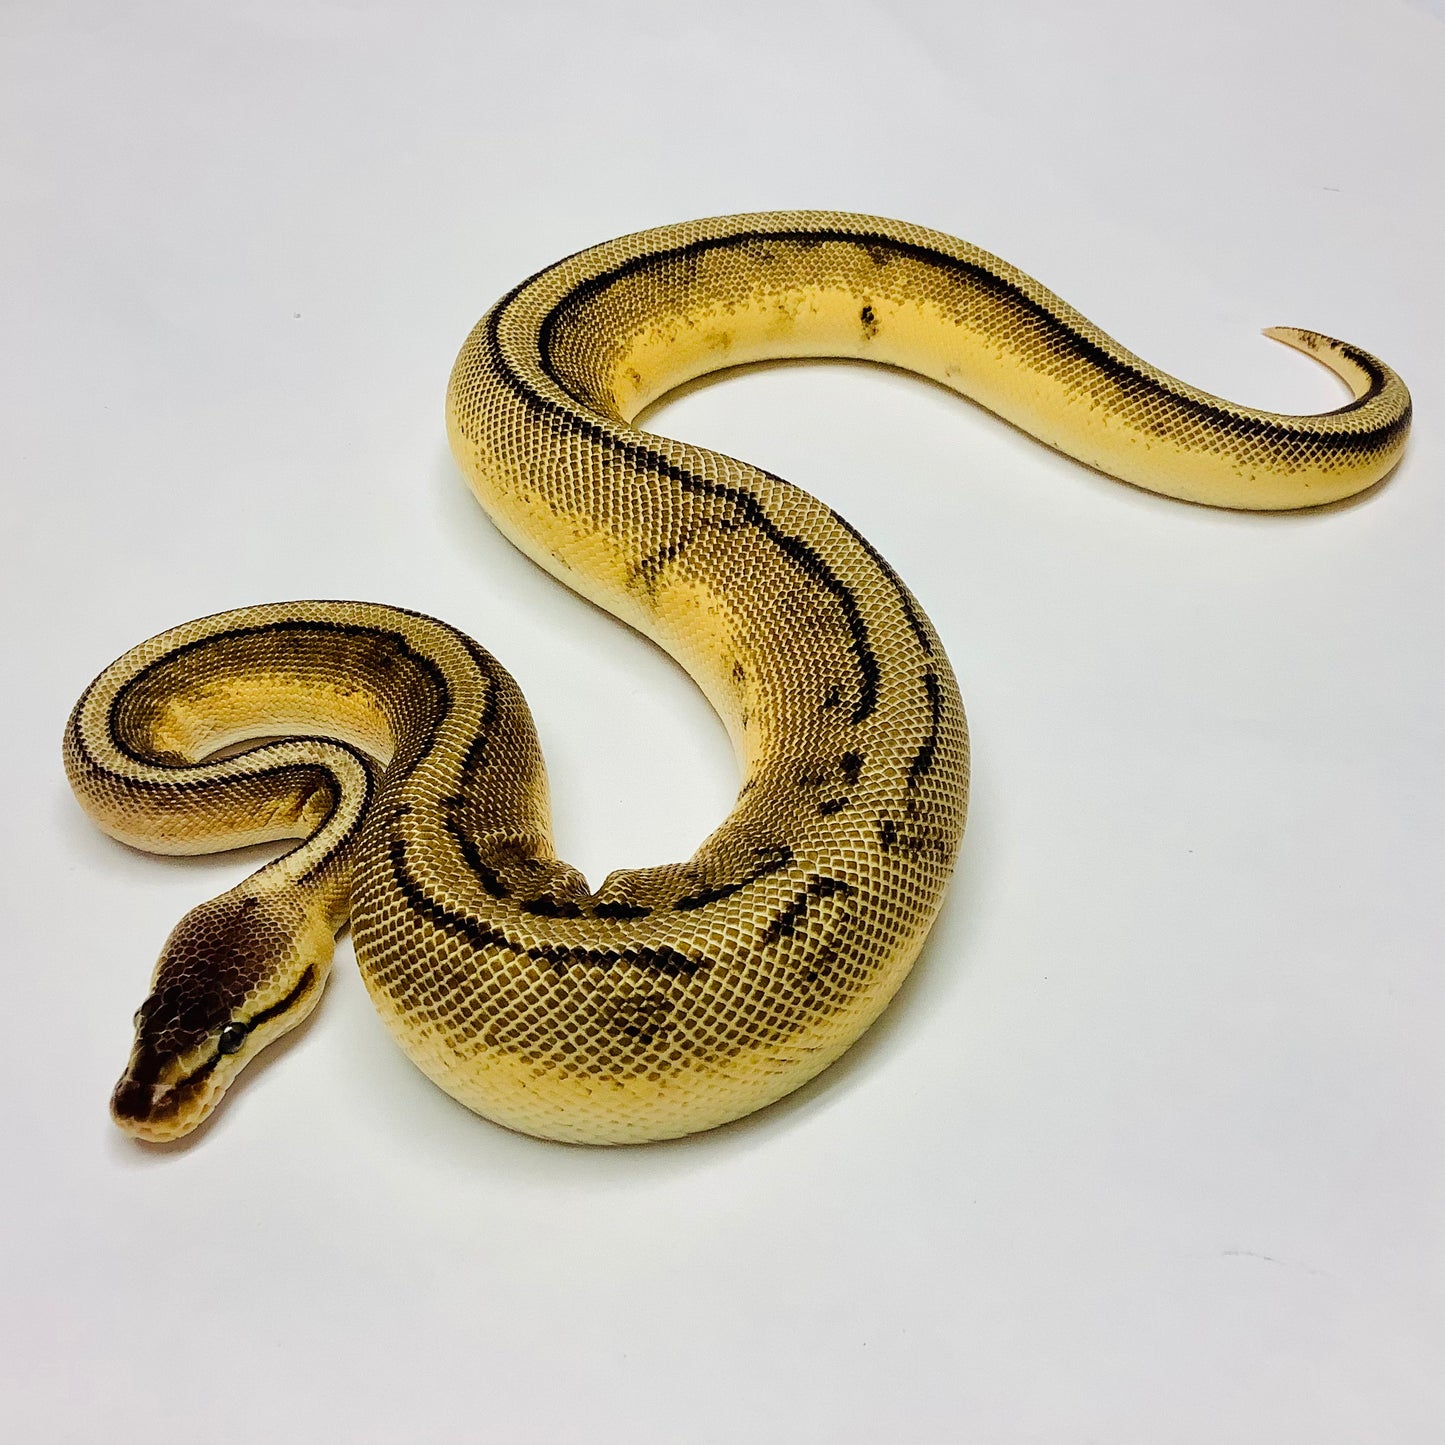 Pastel Genetic Stripe Ball Python - Male #2021M02-1